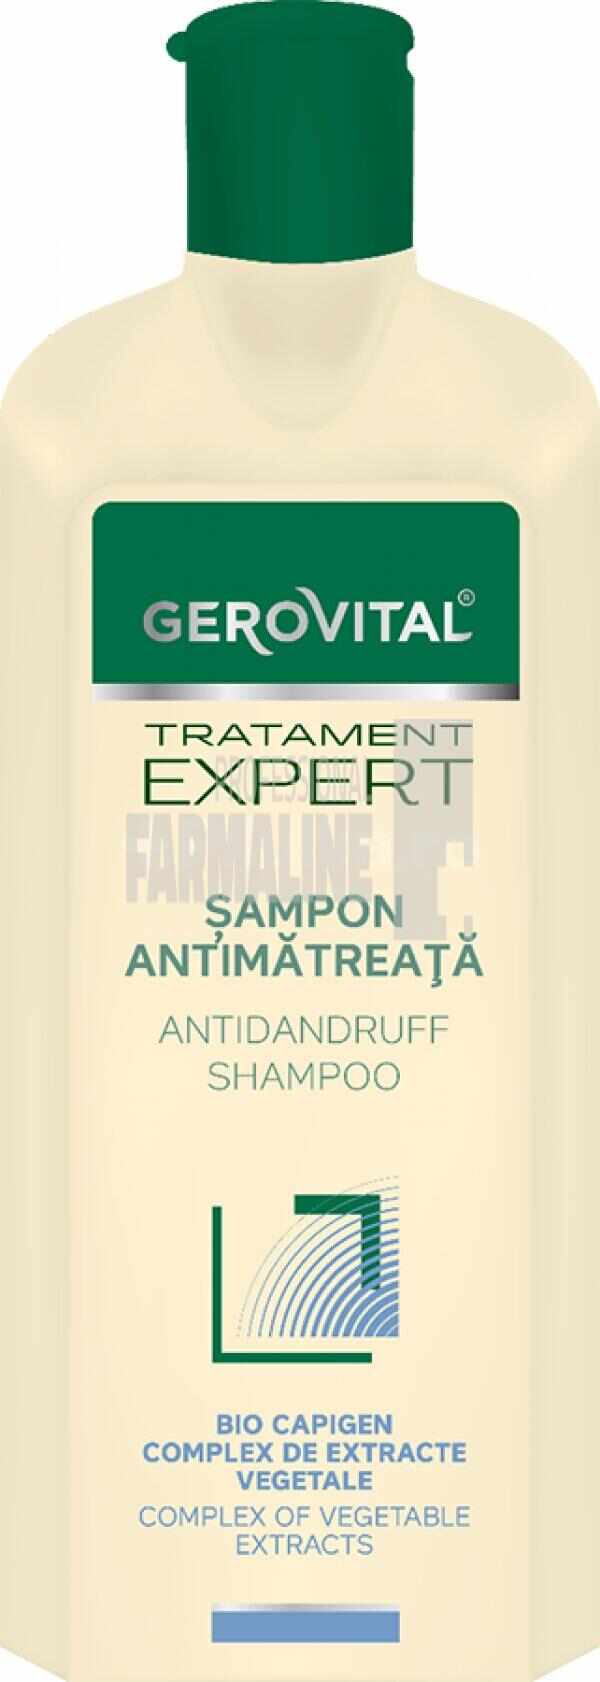 Gerovital Tratament Expert Sampon antimatreata 400 ml